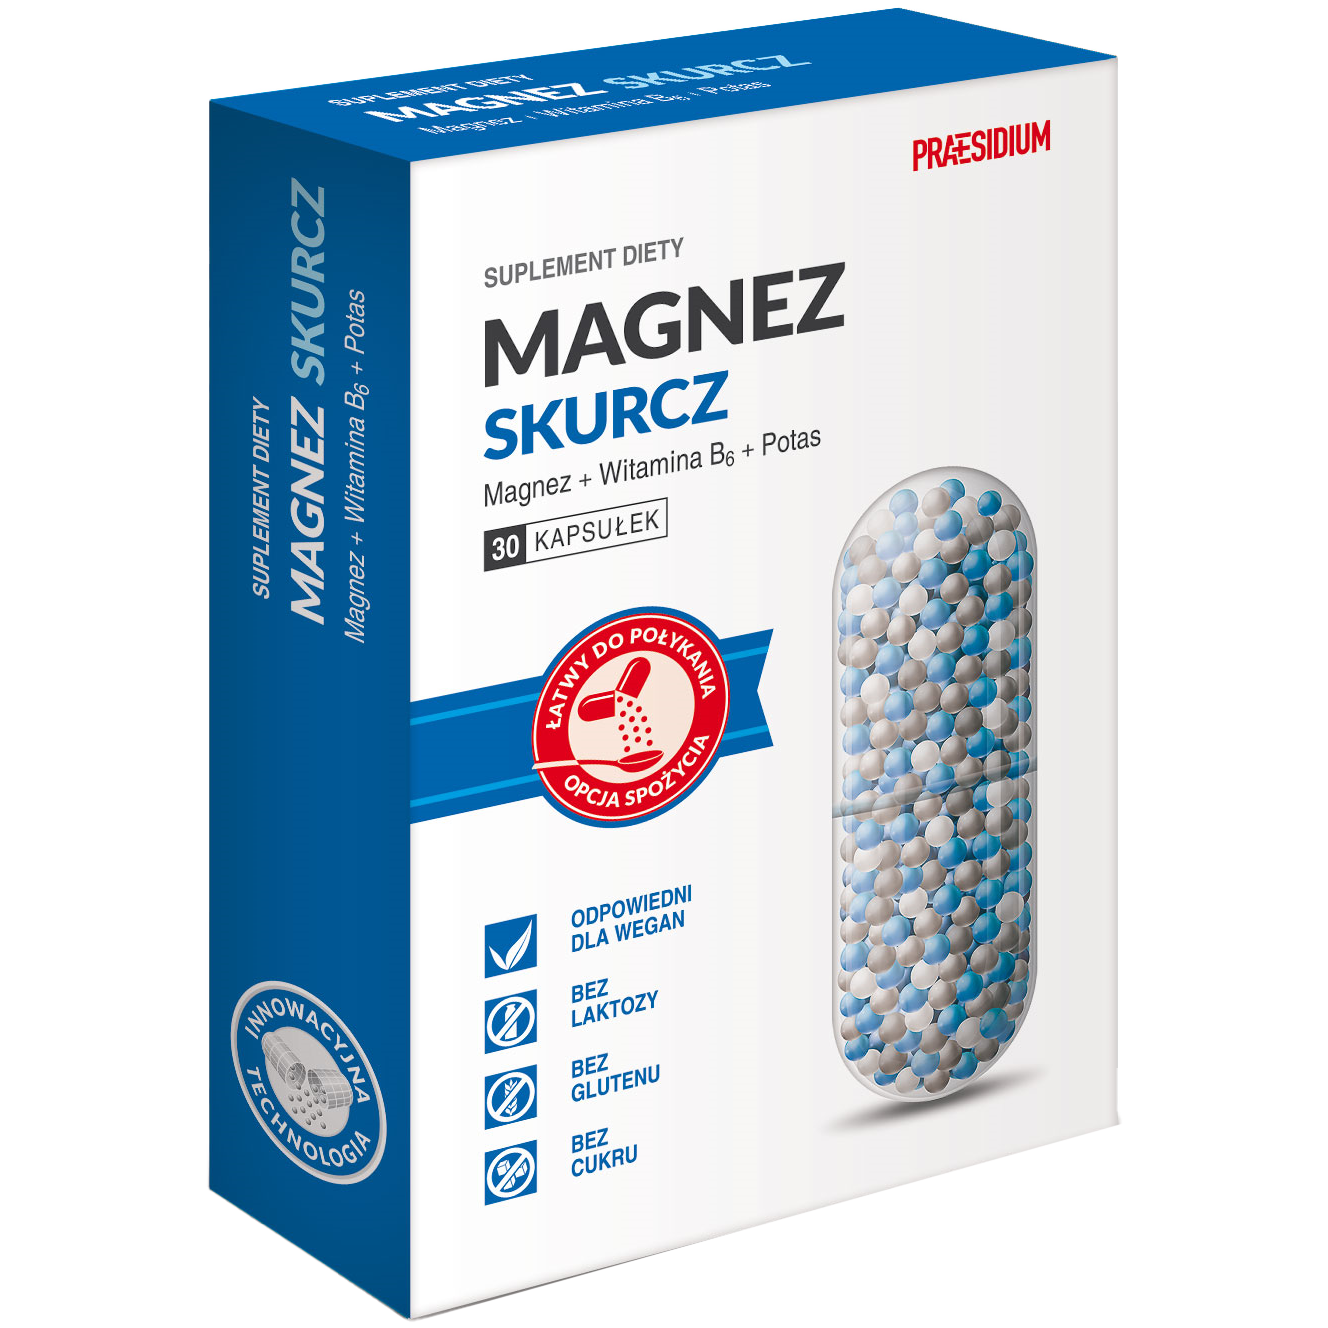 Praesidium Magnez Skurcz микрогранулы, 30 капсул/1 упаковка